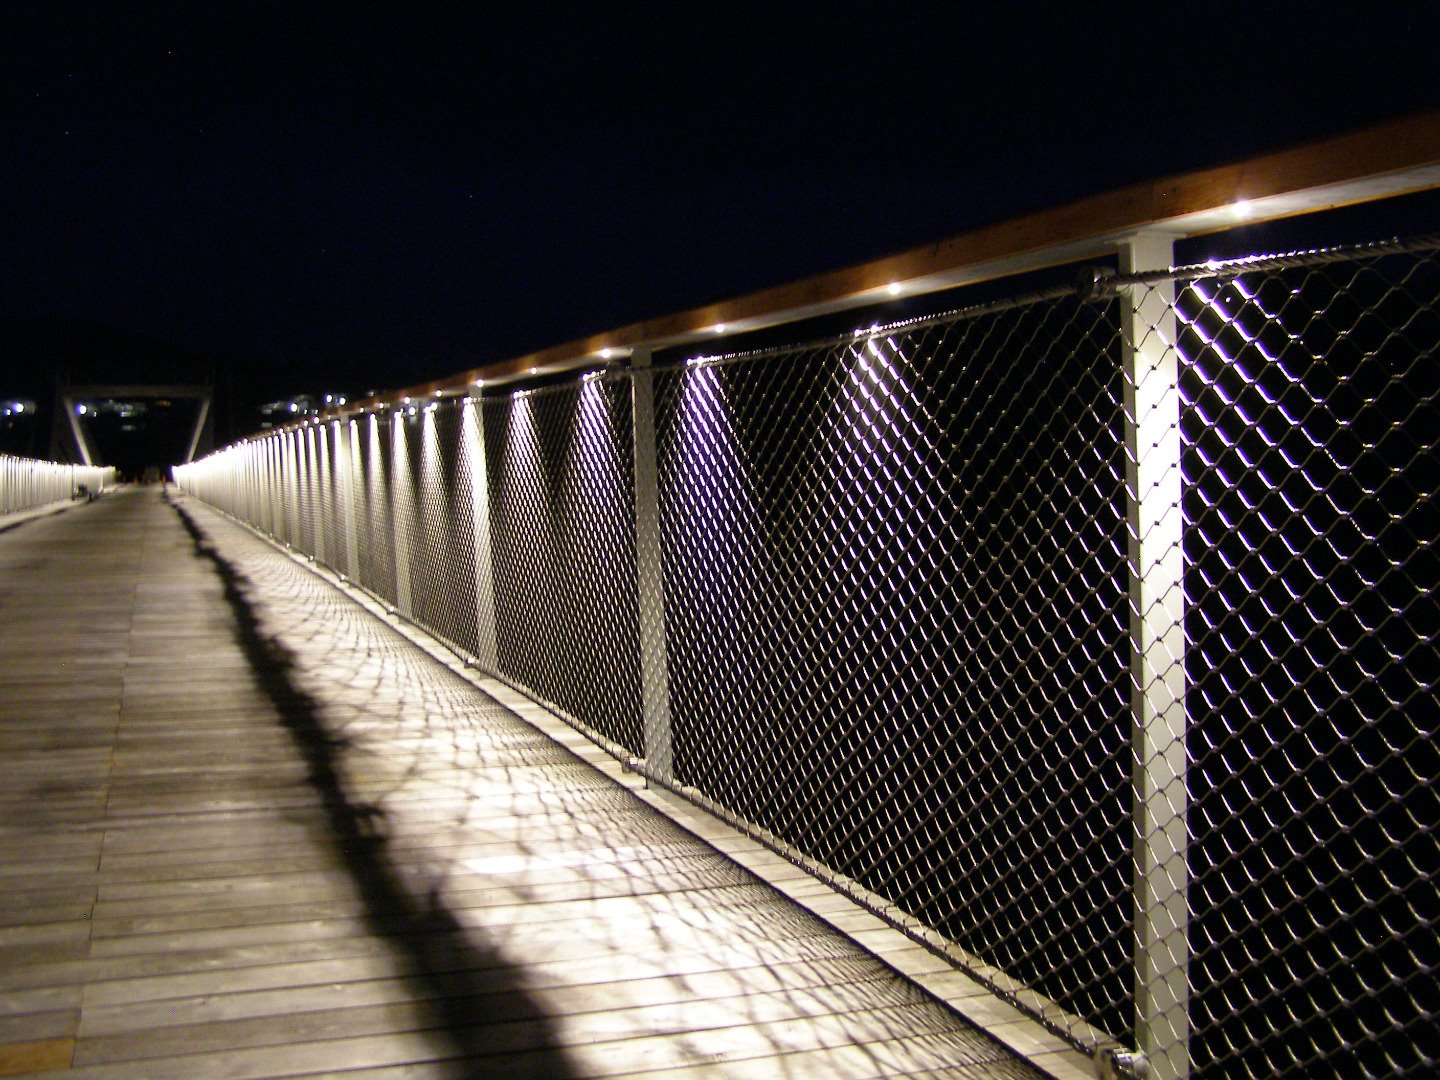 Night photo of the bridge